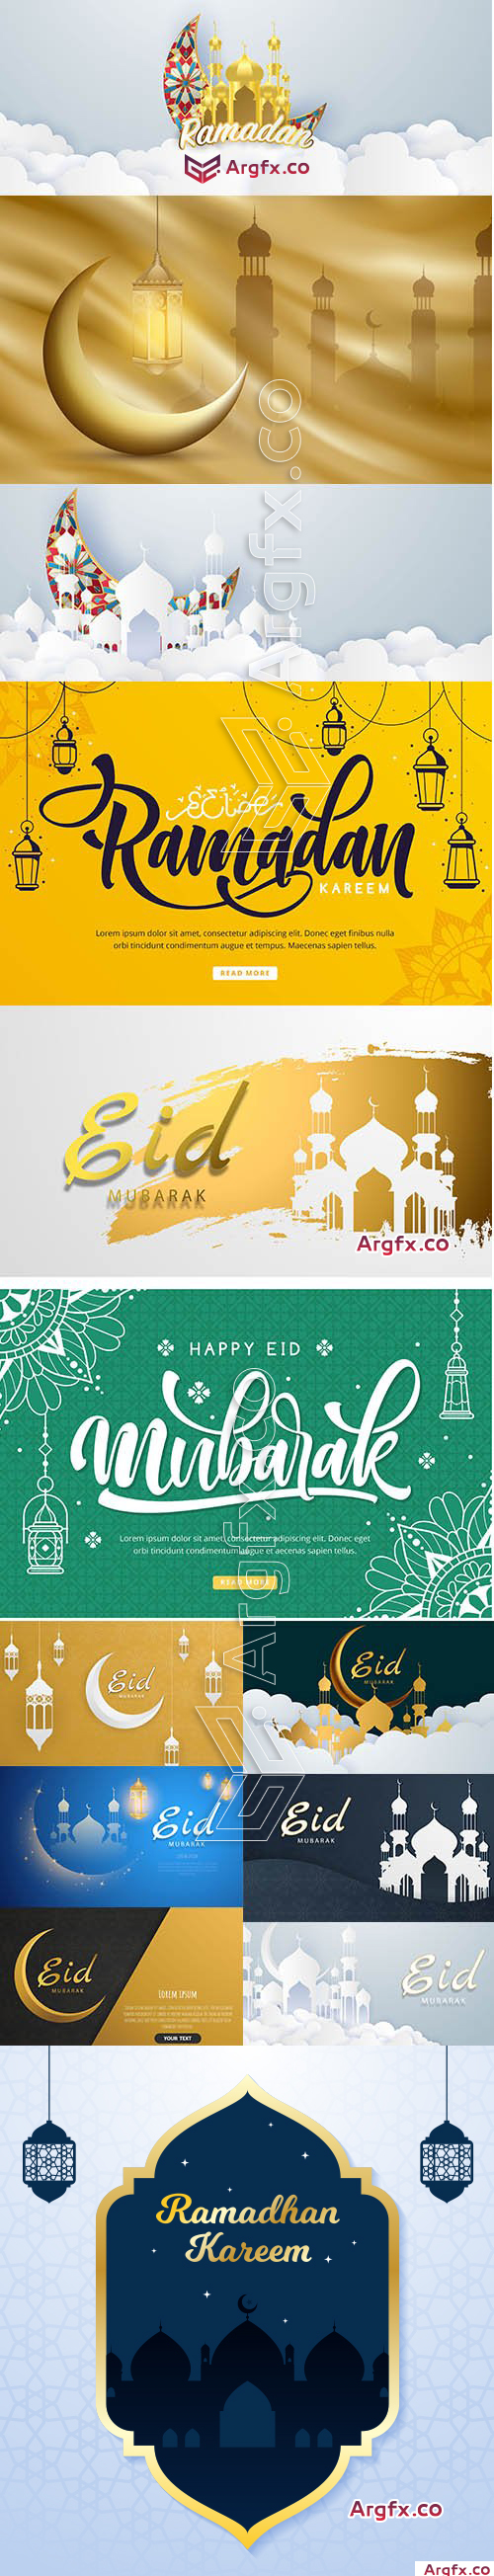 Happy Ramadan Kareem and Eid Murabak 2020 Background